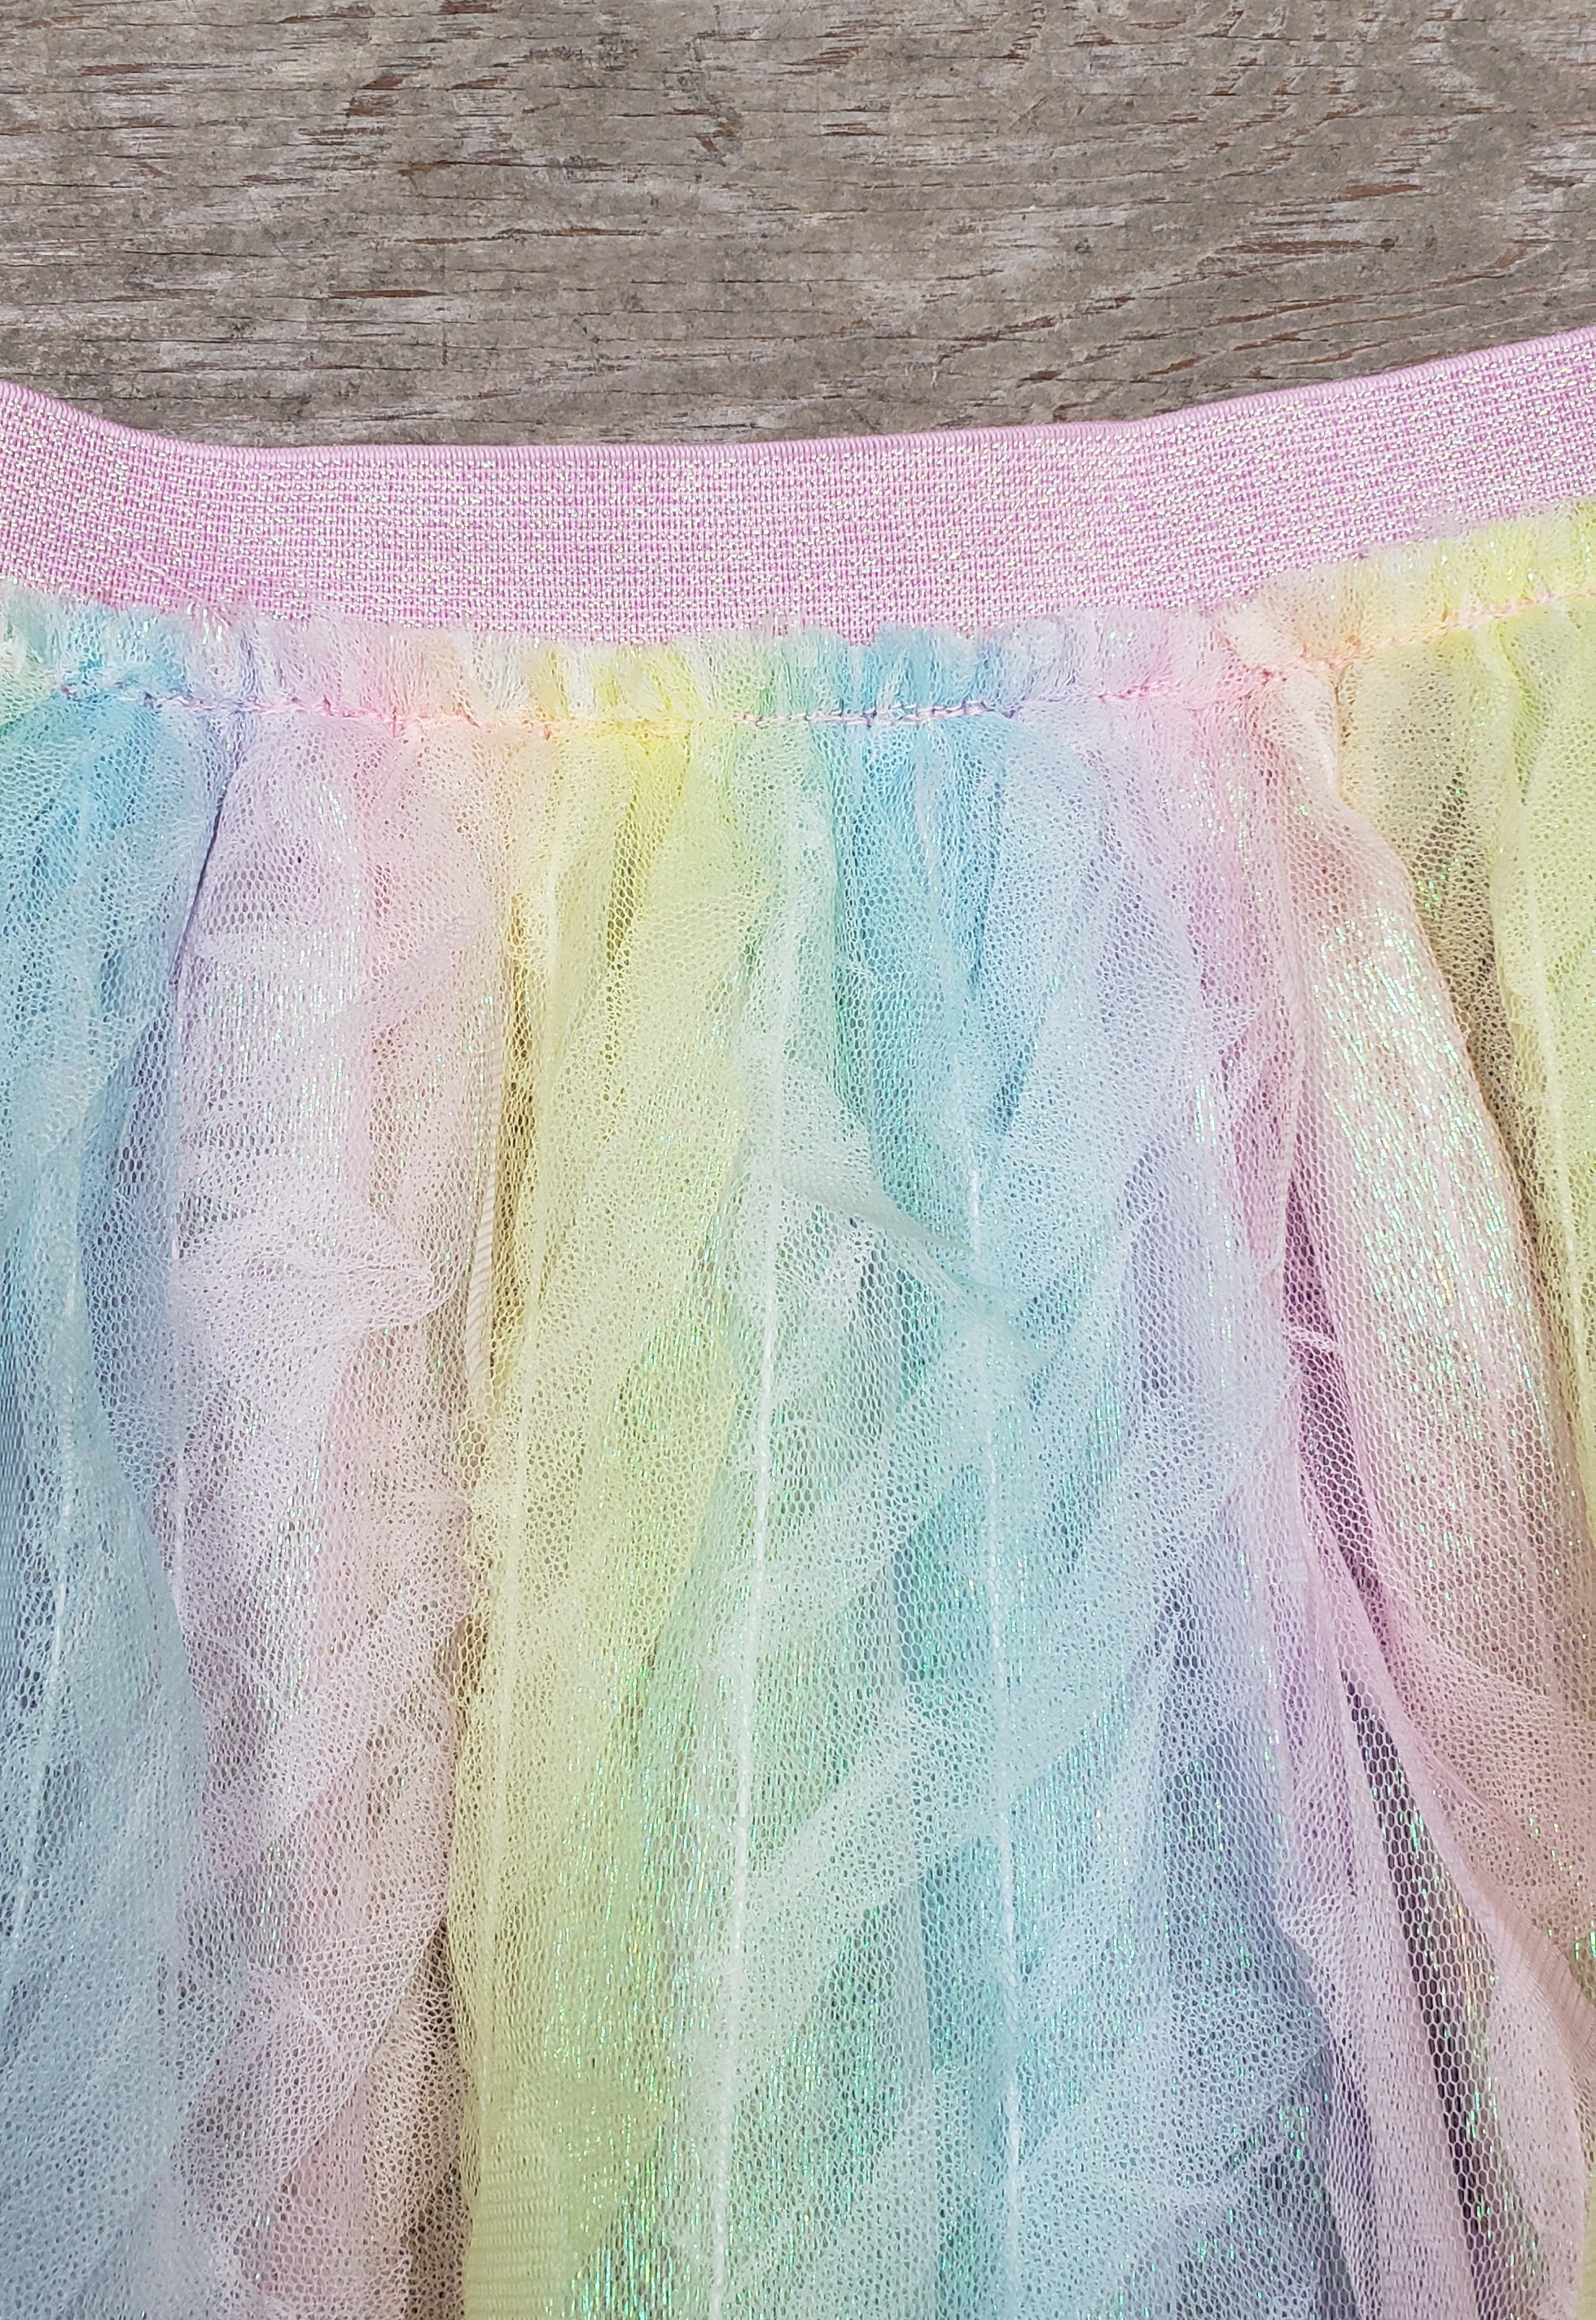 Girls pastel multicolored netted tutu skirt